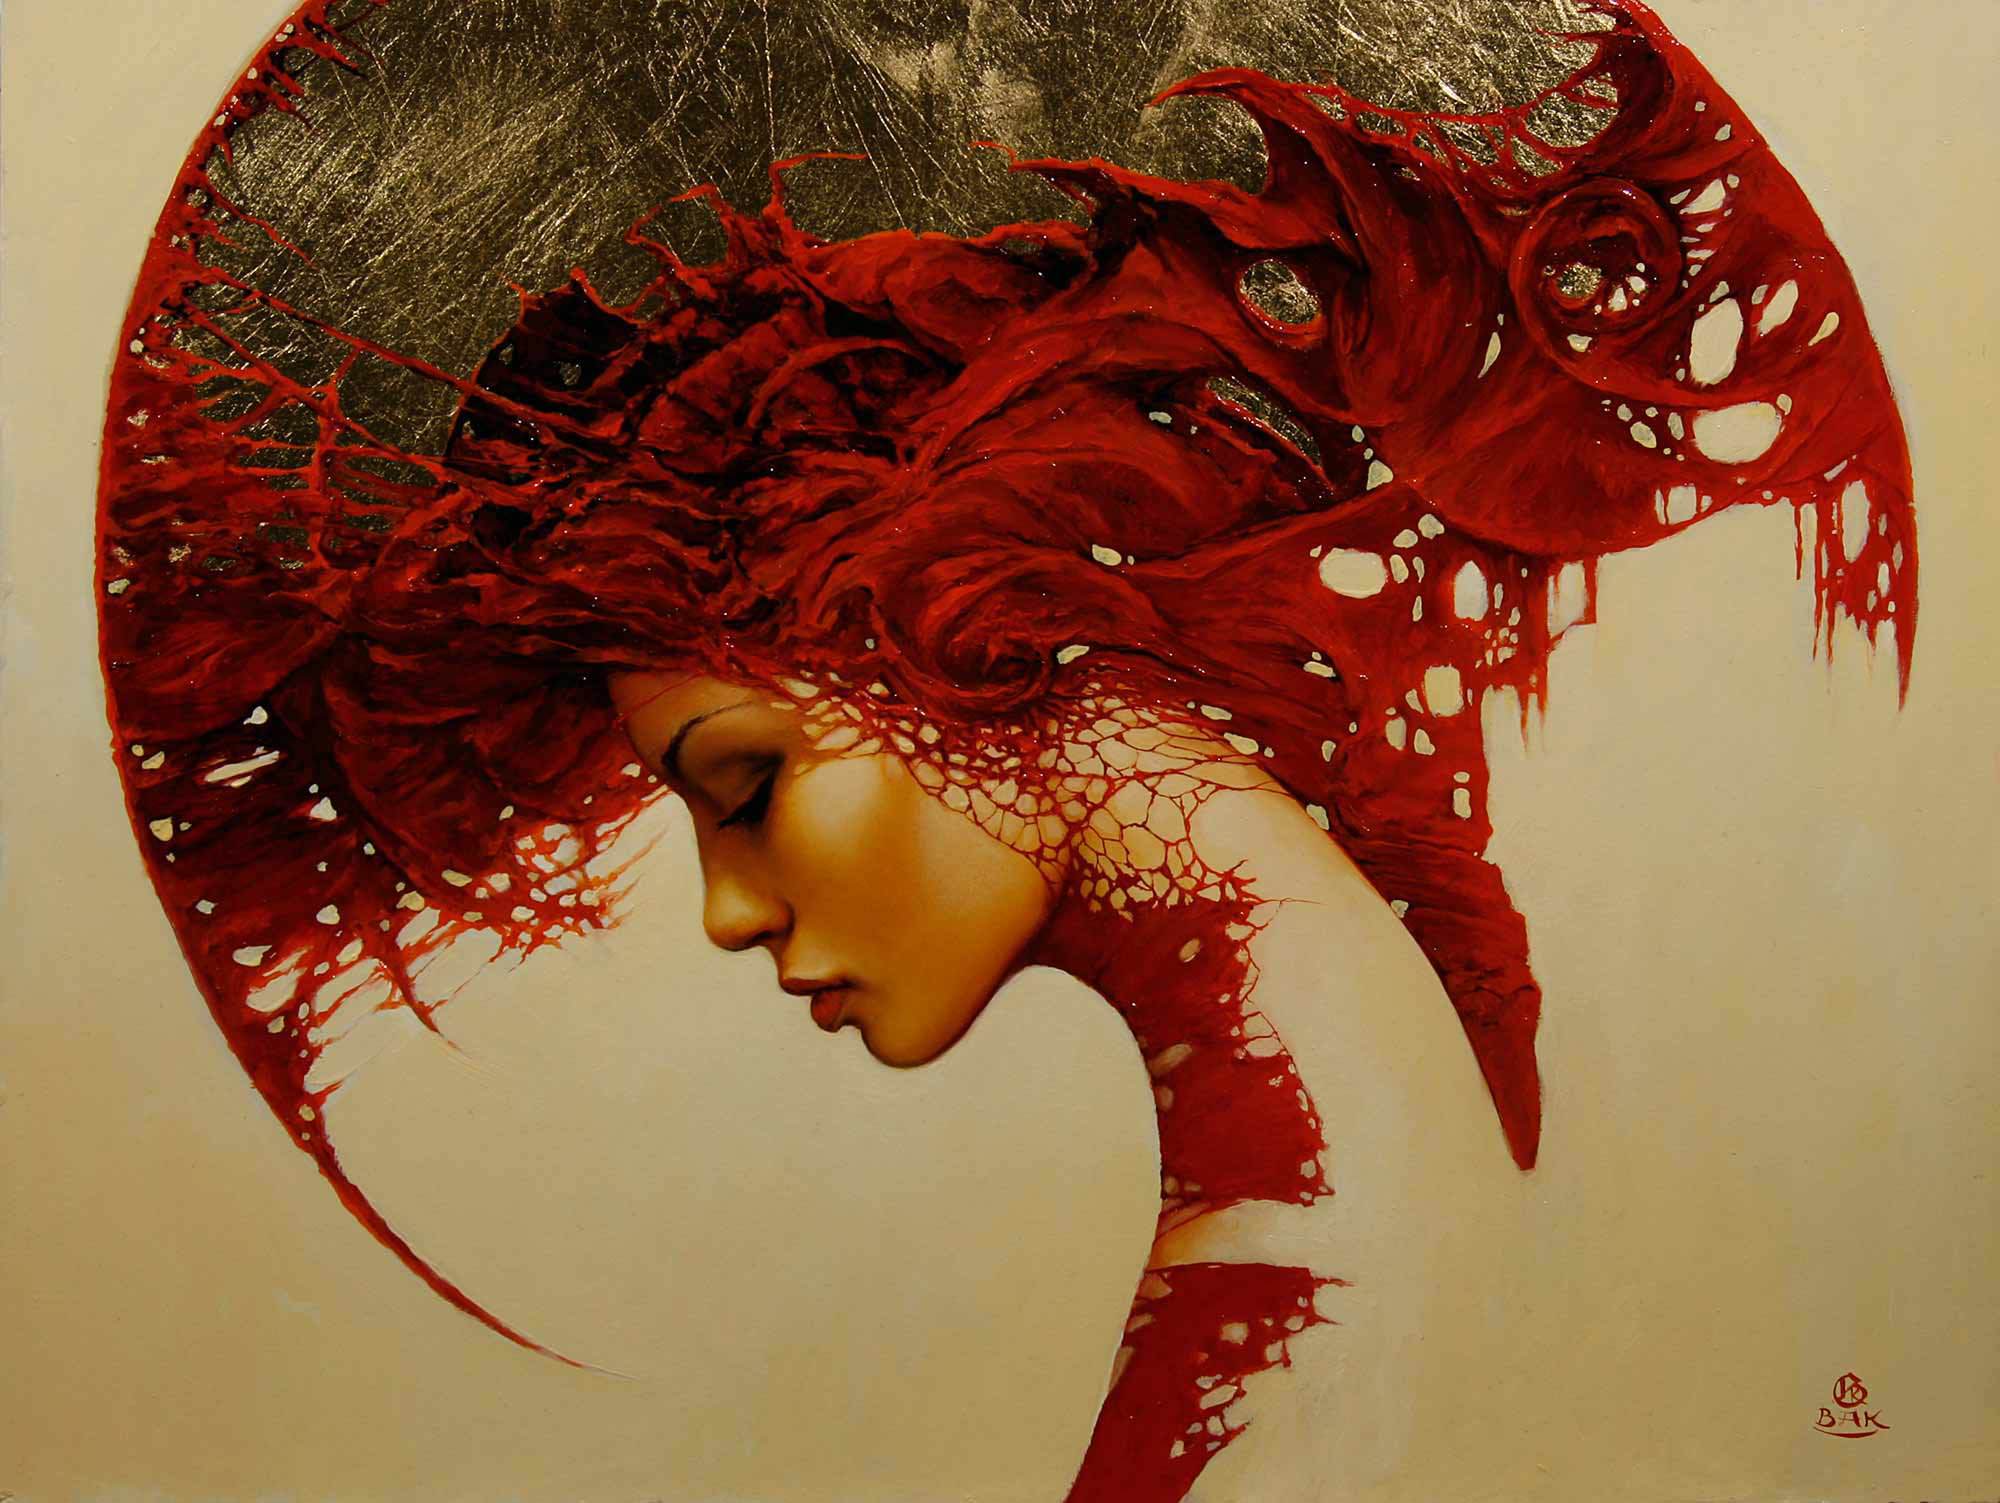 art-woman-shapes-patterns-fantasy-gothic-red-portrait-painting-surrealism-headdress.jpg